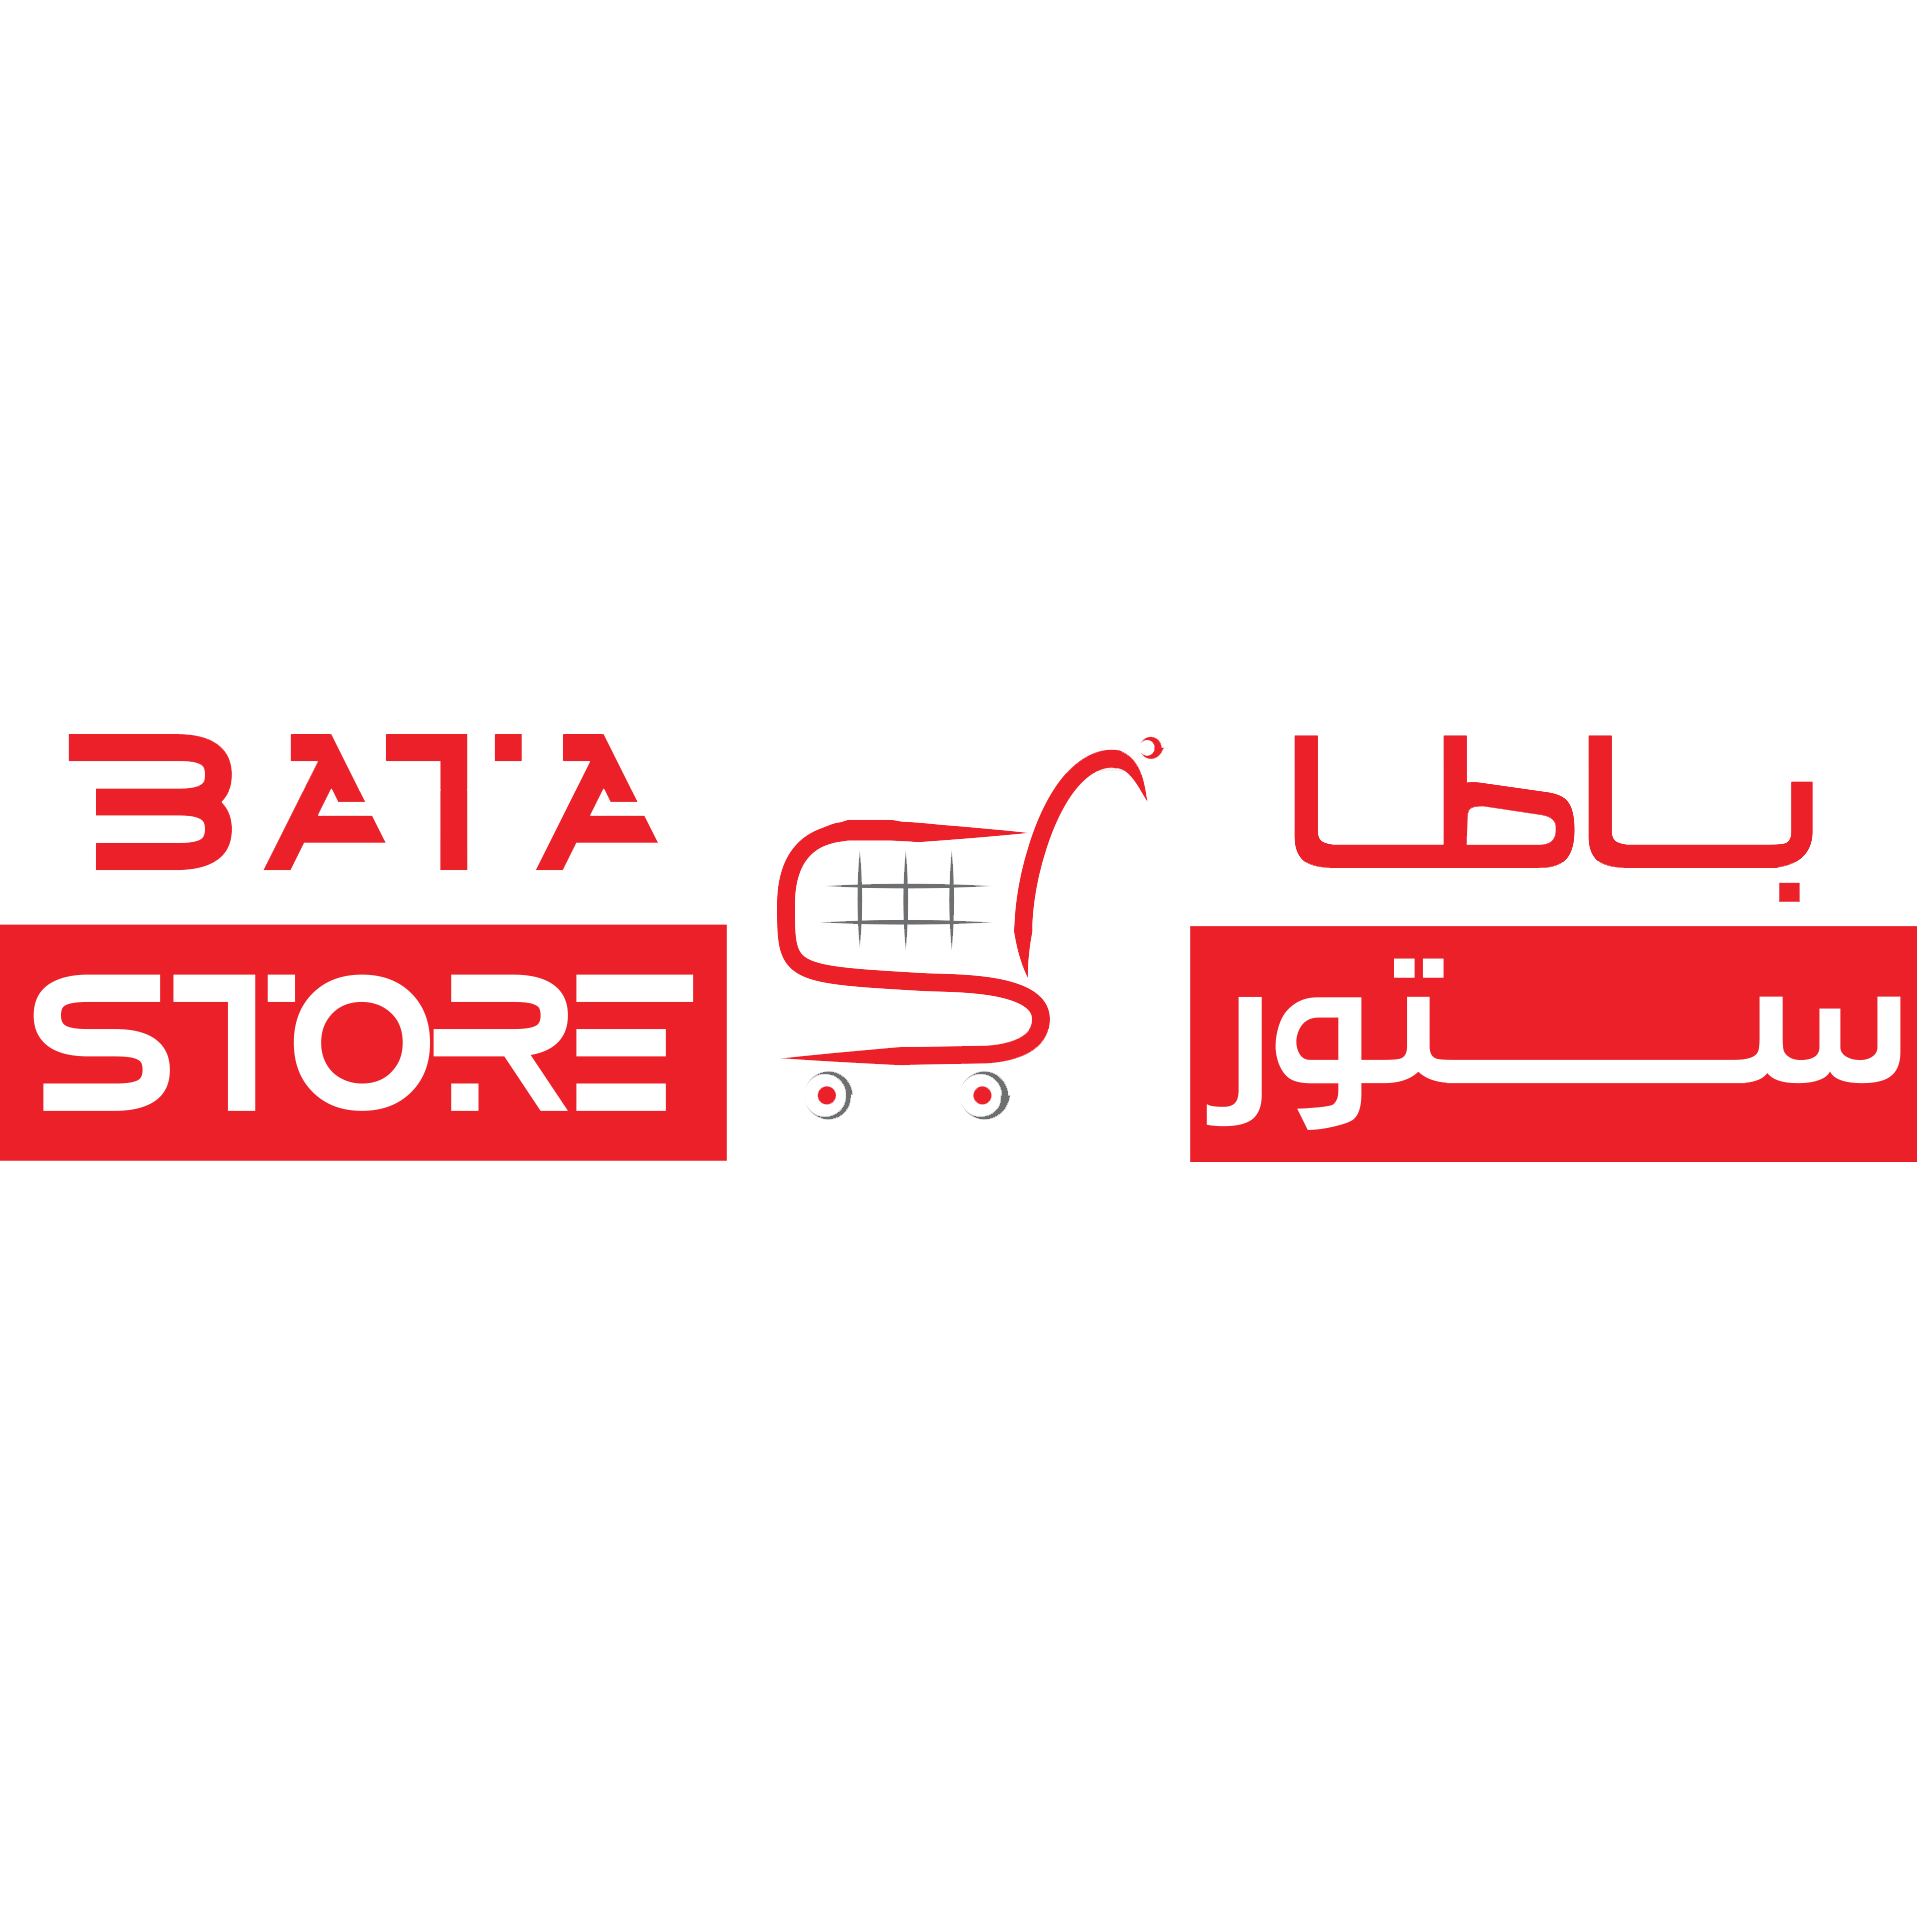 Bata Stores